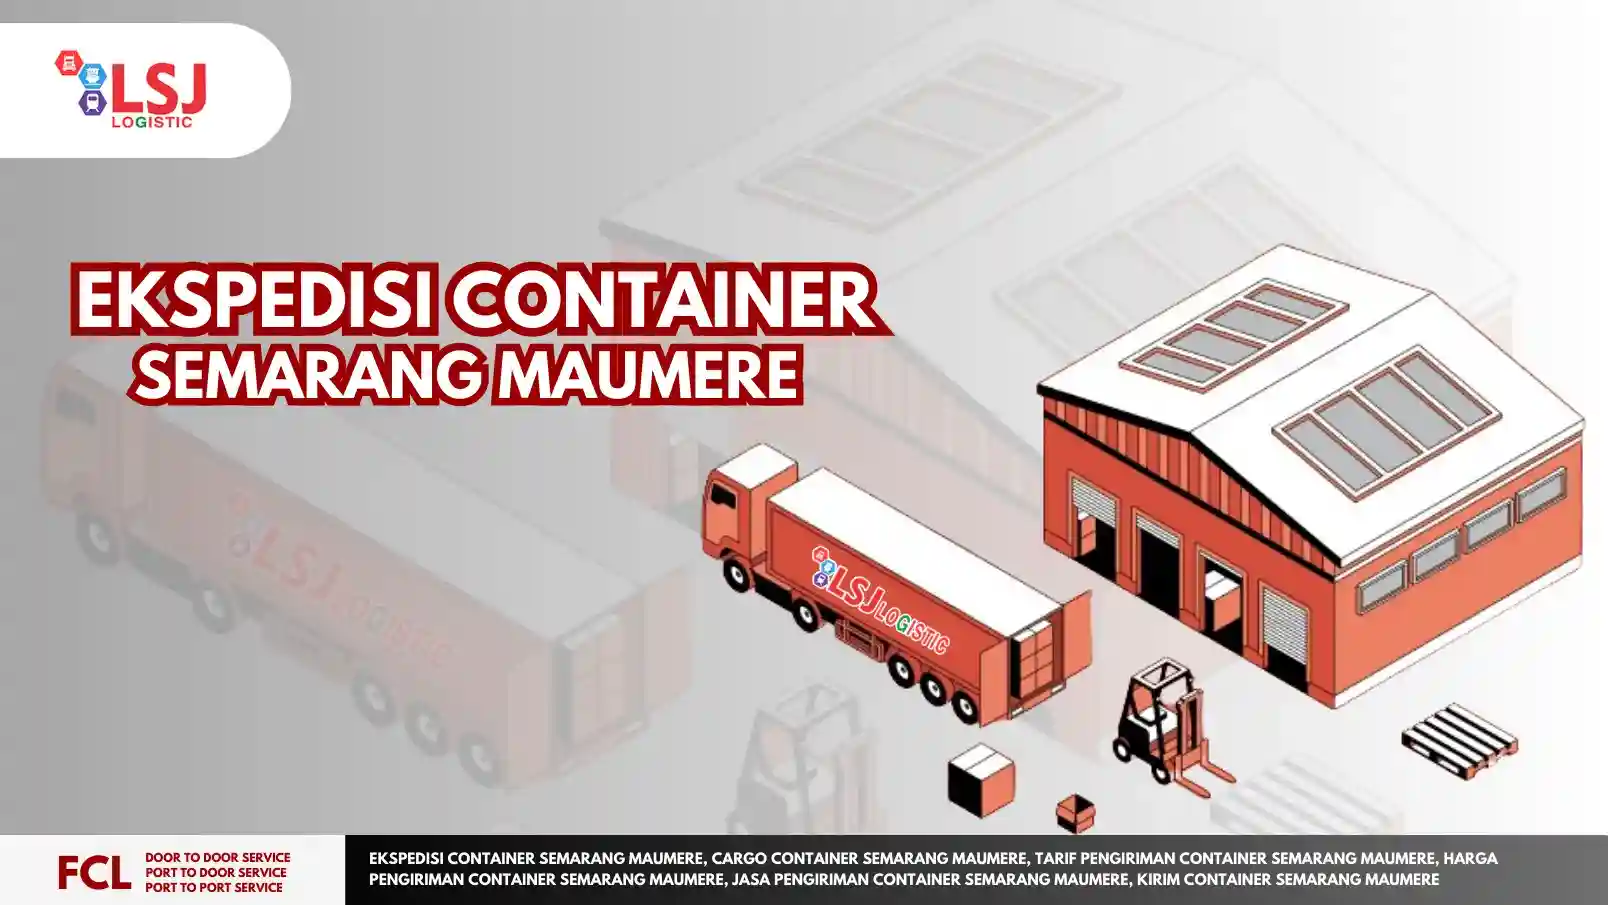 Ekspedisi Container Semarang Maumere